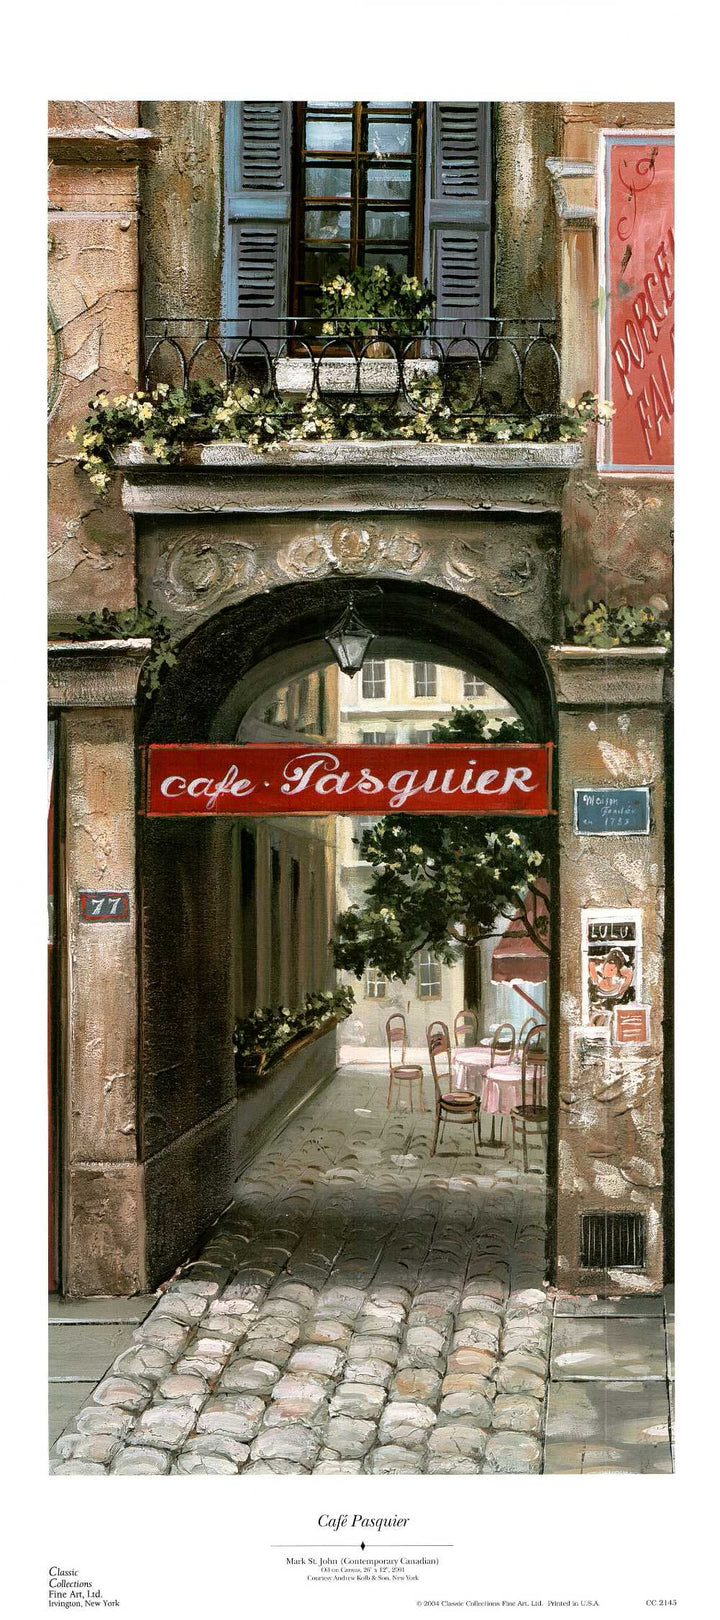 Café Pasquier by Mark St. John - 14 X 31" - Fine Art Poster.